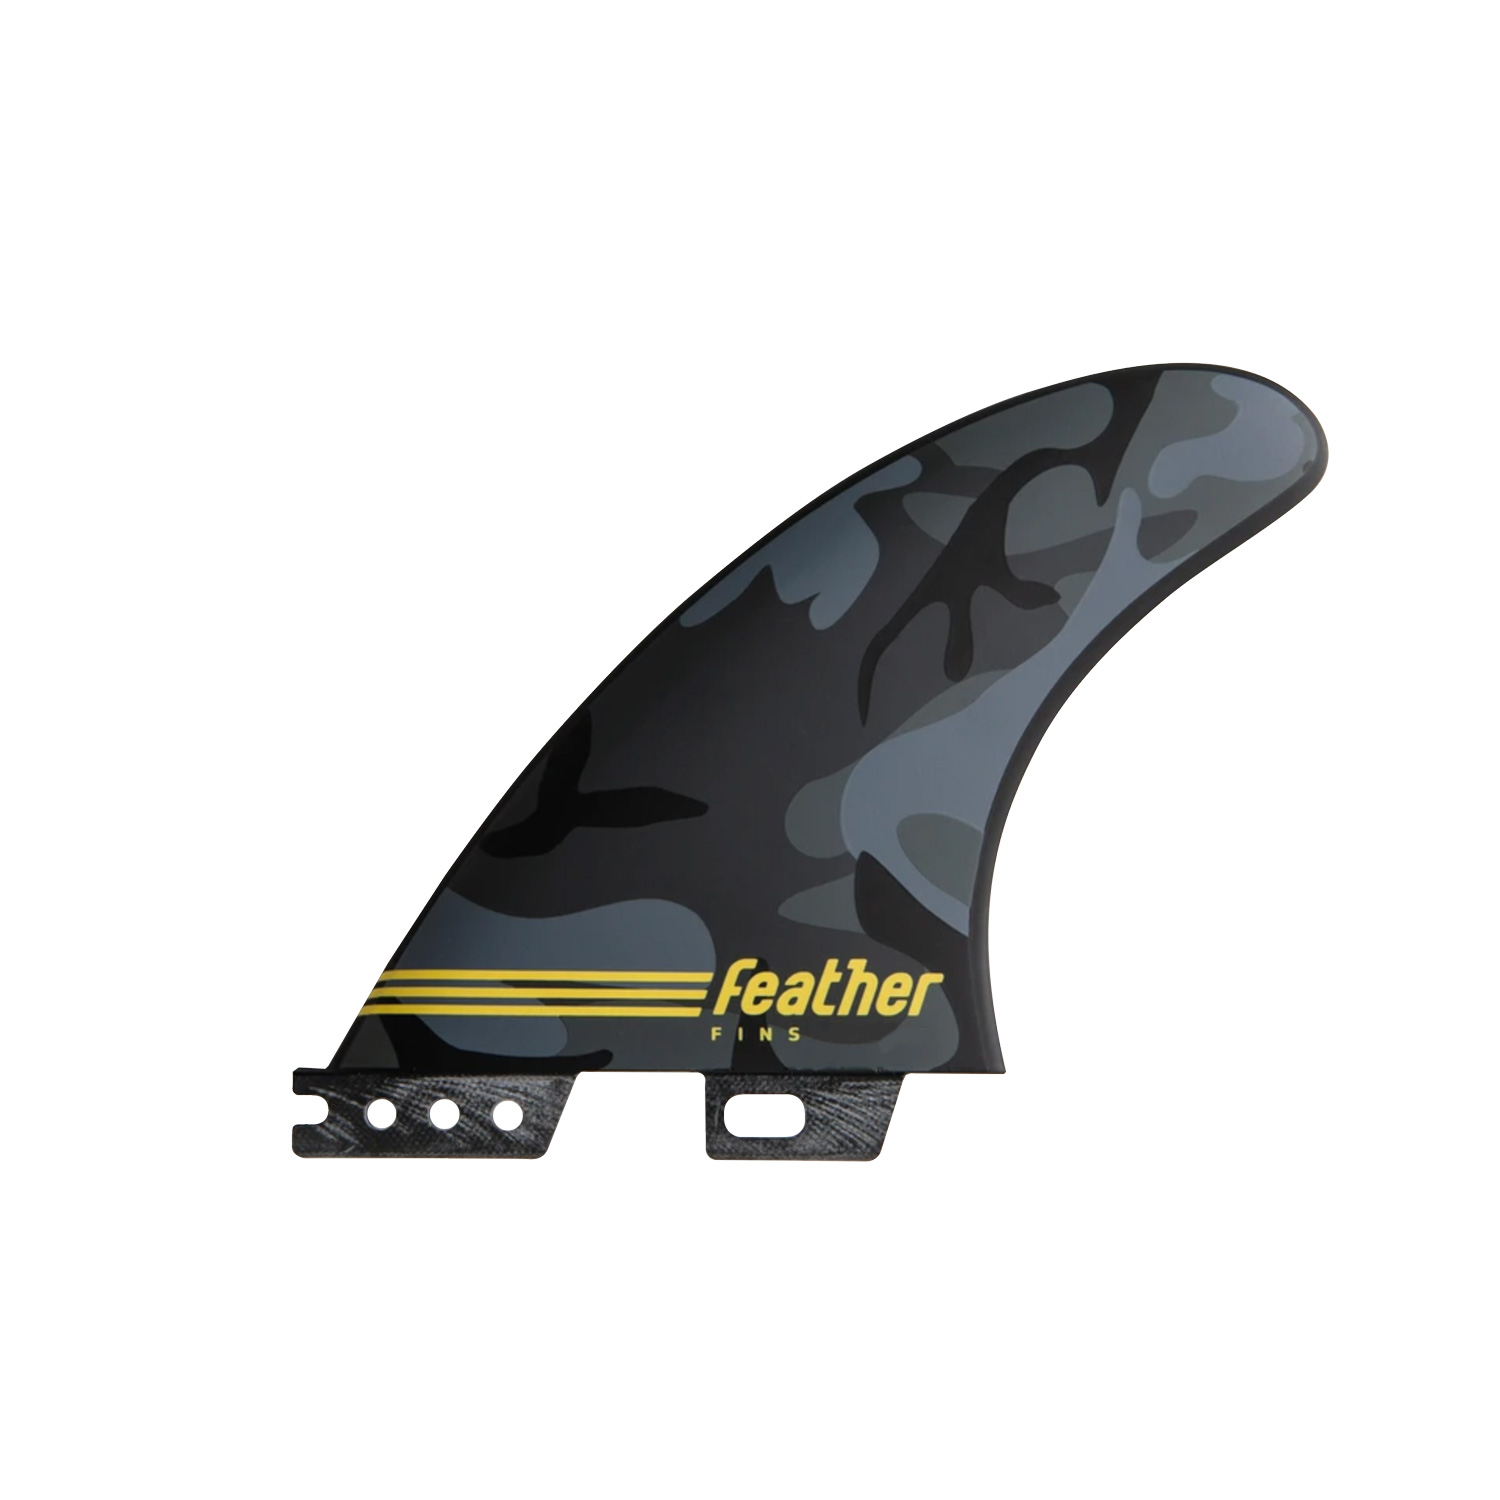 Feather Fins Joan Duru Athlete Series Click Tab – Thruster 3 fins